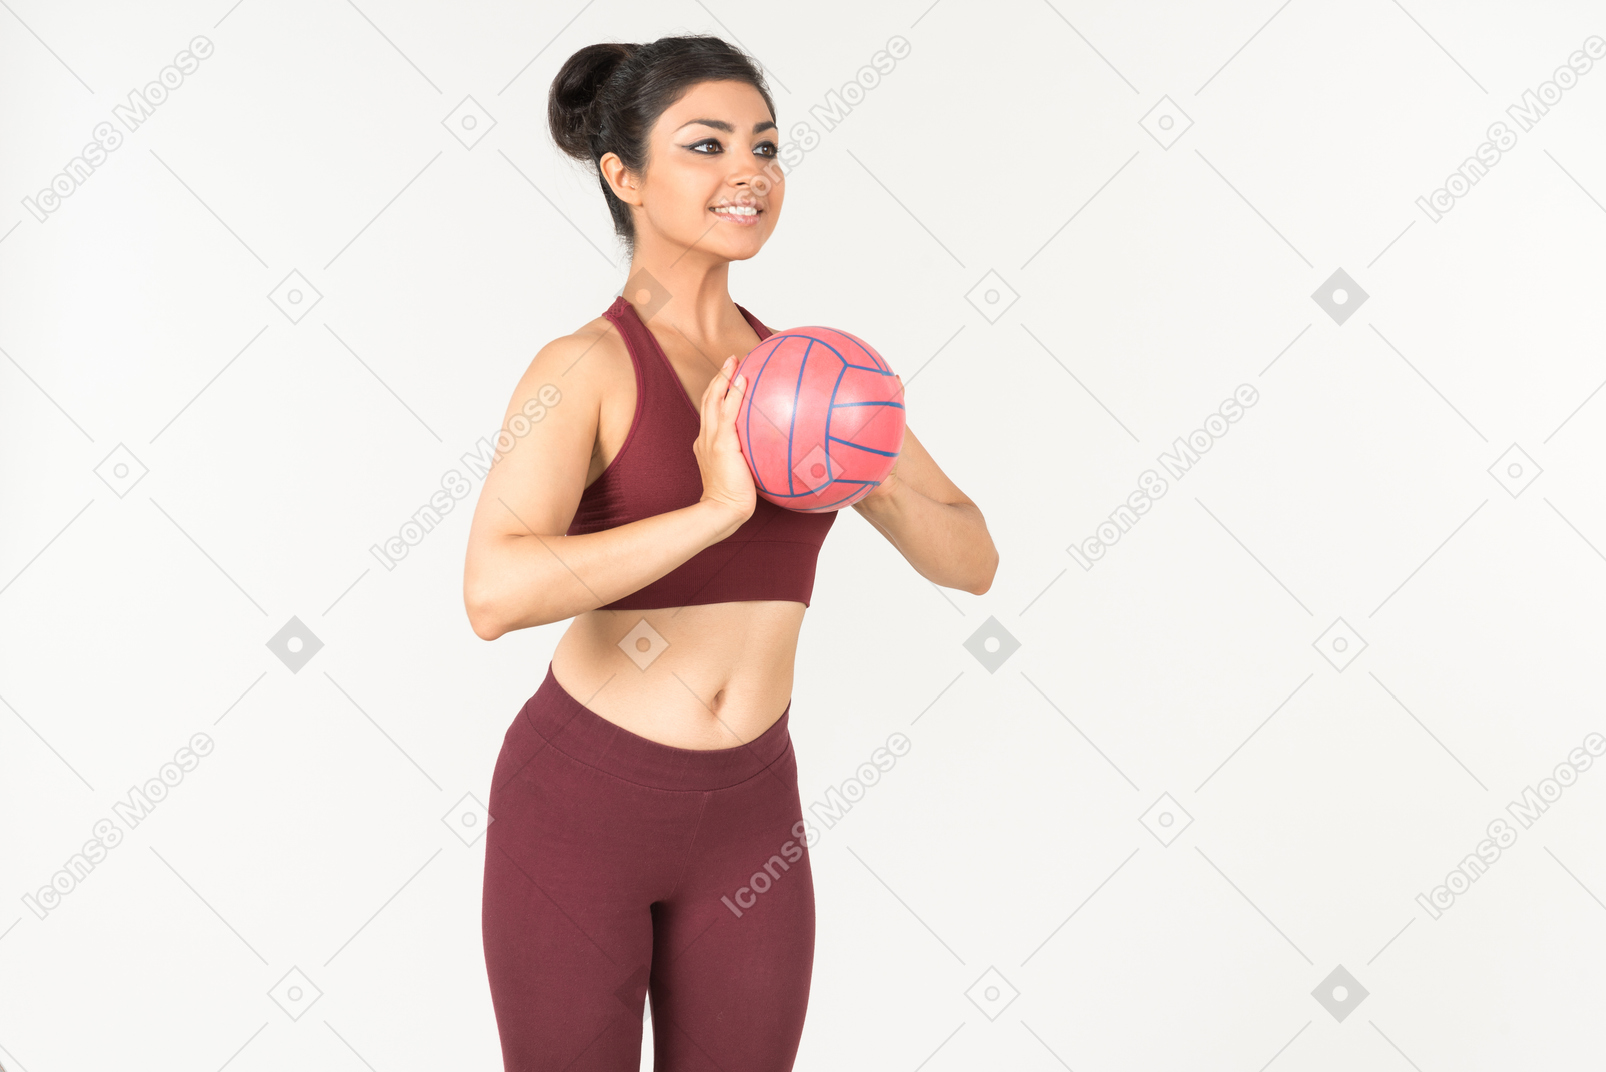 Jovem mulher indiana em sporstwear vai jogar uma bola